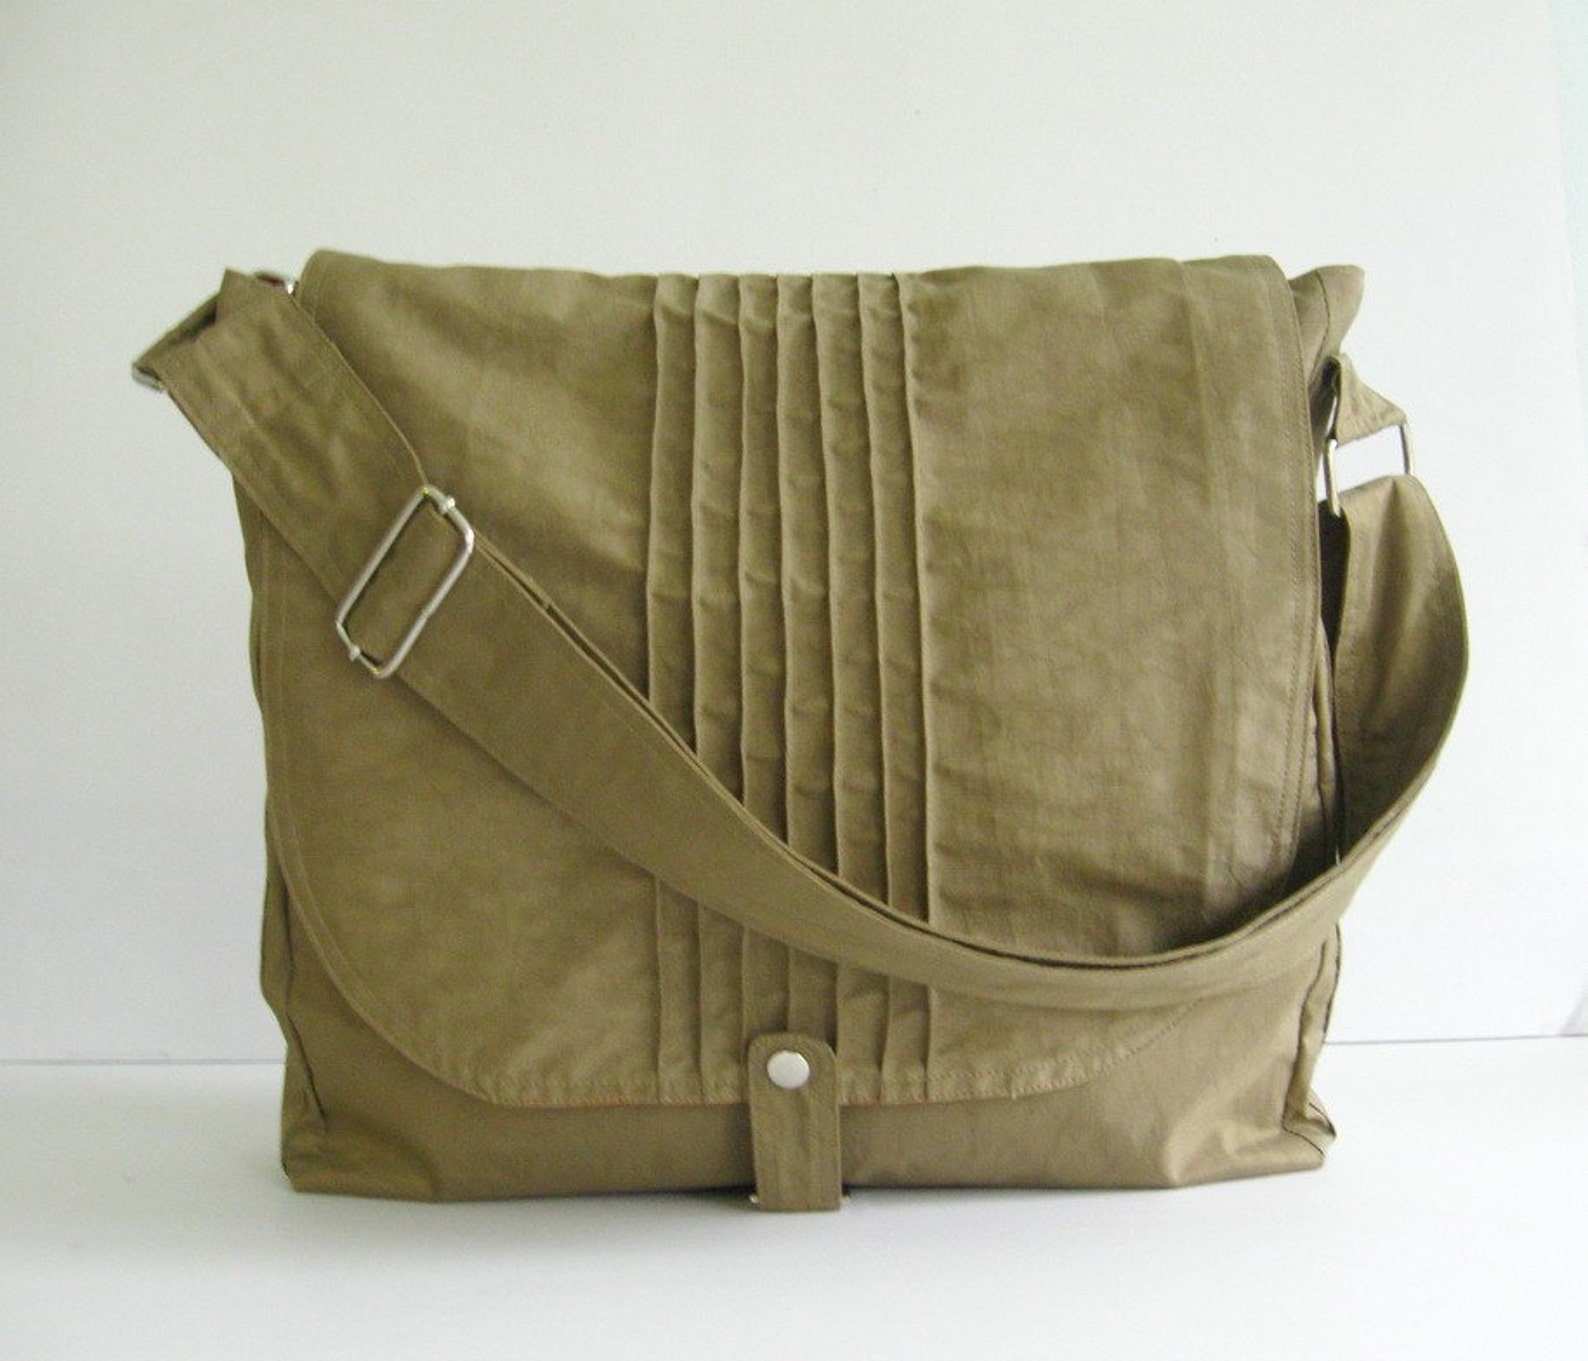 Sale Khaki Water Resistant Messenger Bag school bag tote | Etsy